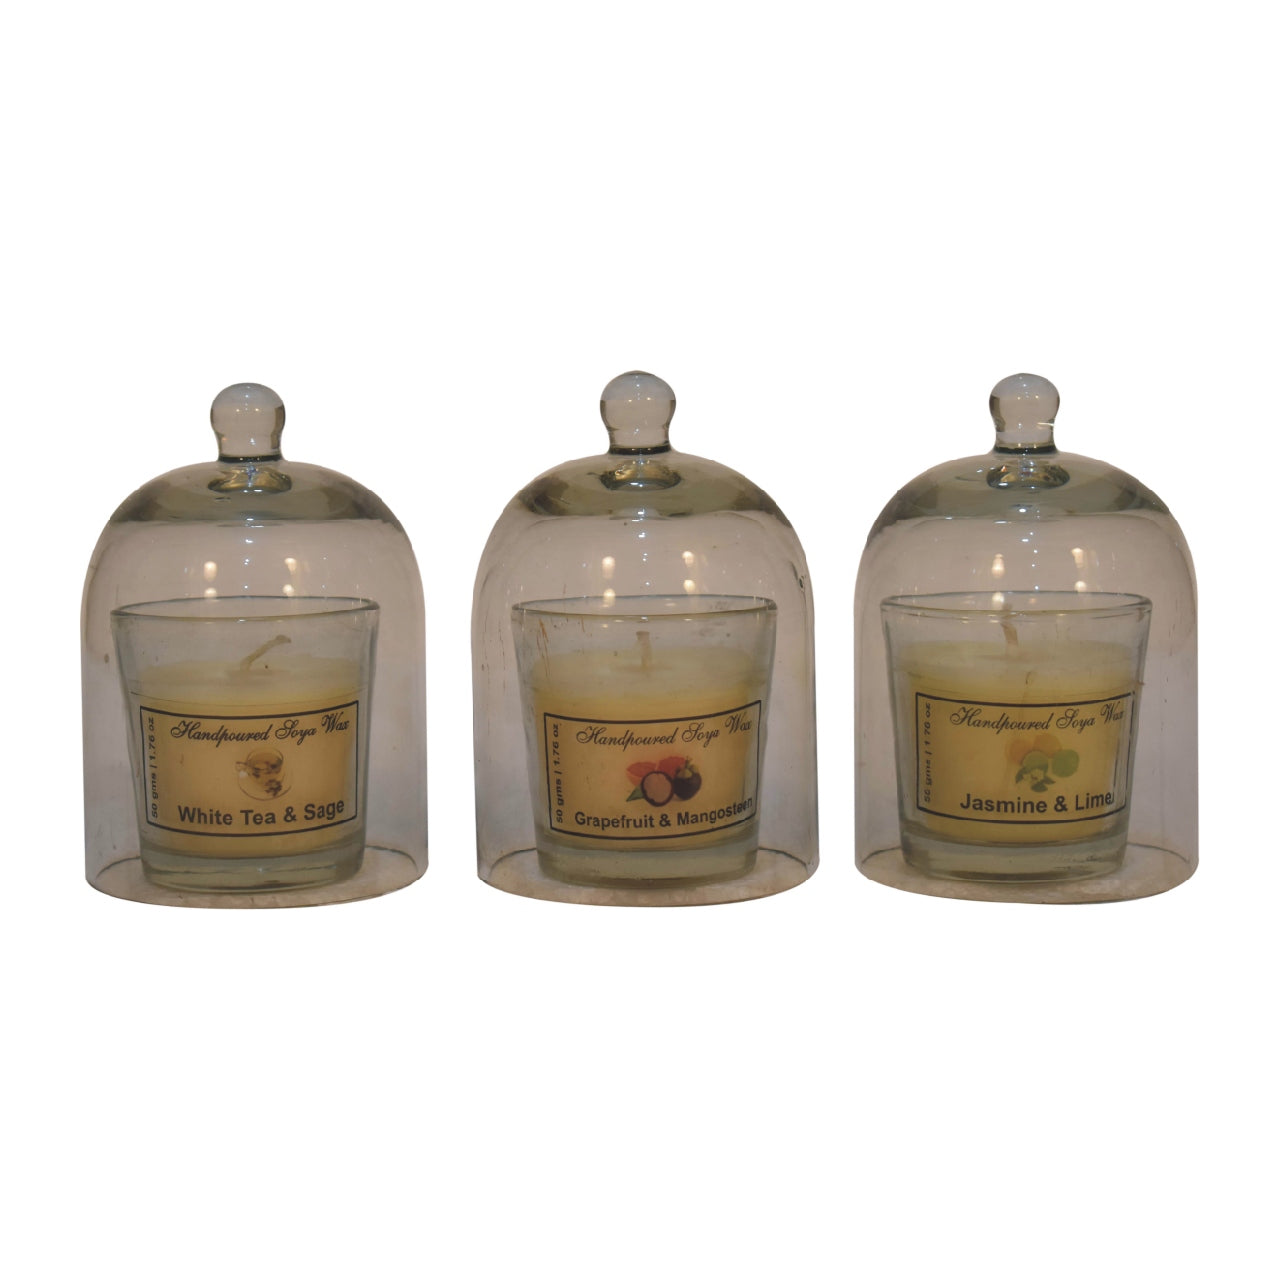 View Round Candle Set of 3 White Tea Sage Grapefruit Mangosteen Jasmine Lime information